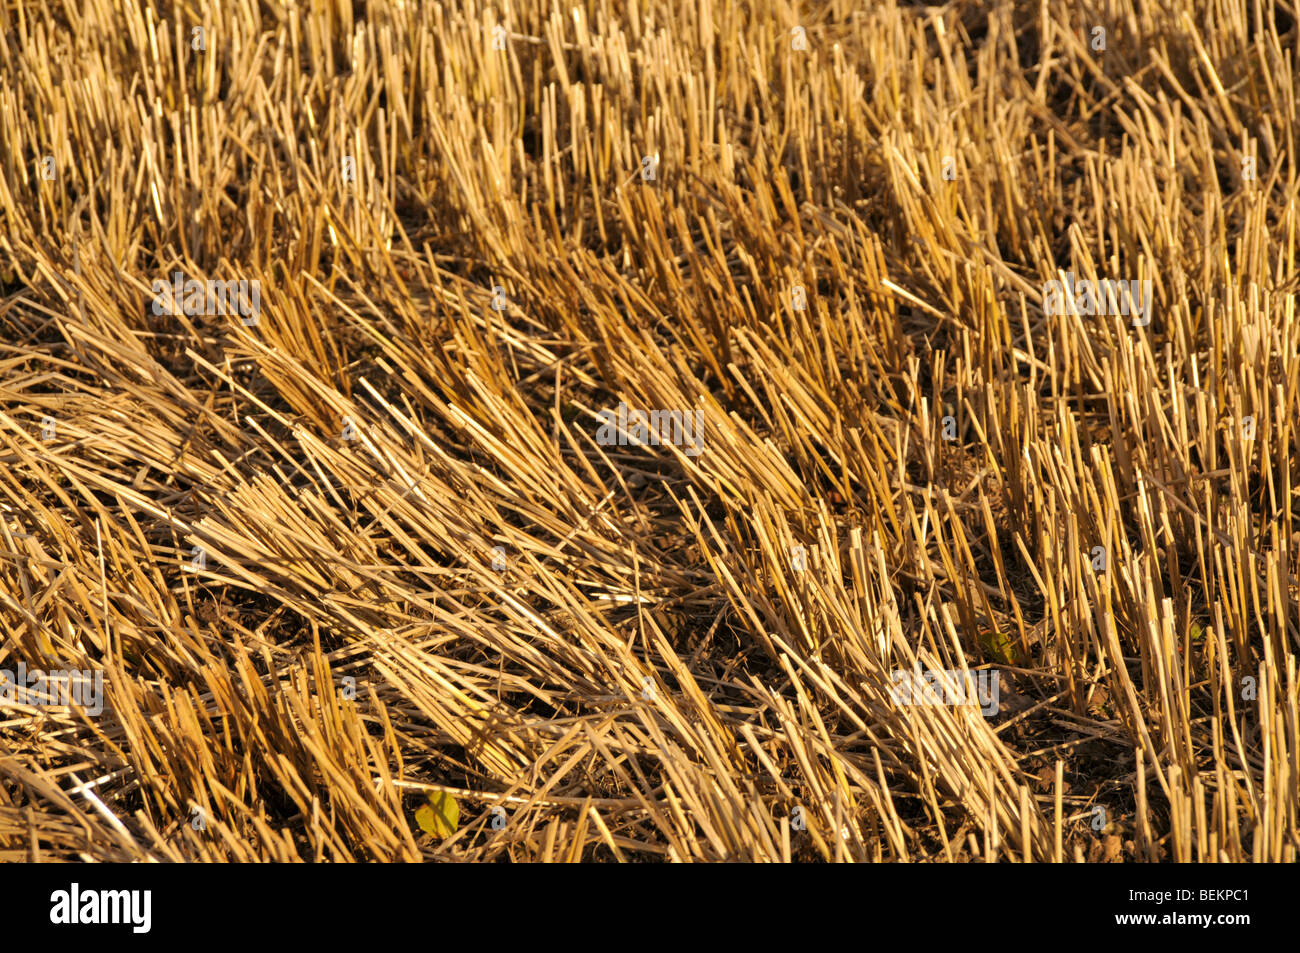 Waving pattern of cut barley stumps/ stalks left in the field. Stock Photo